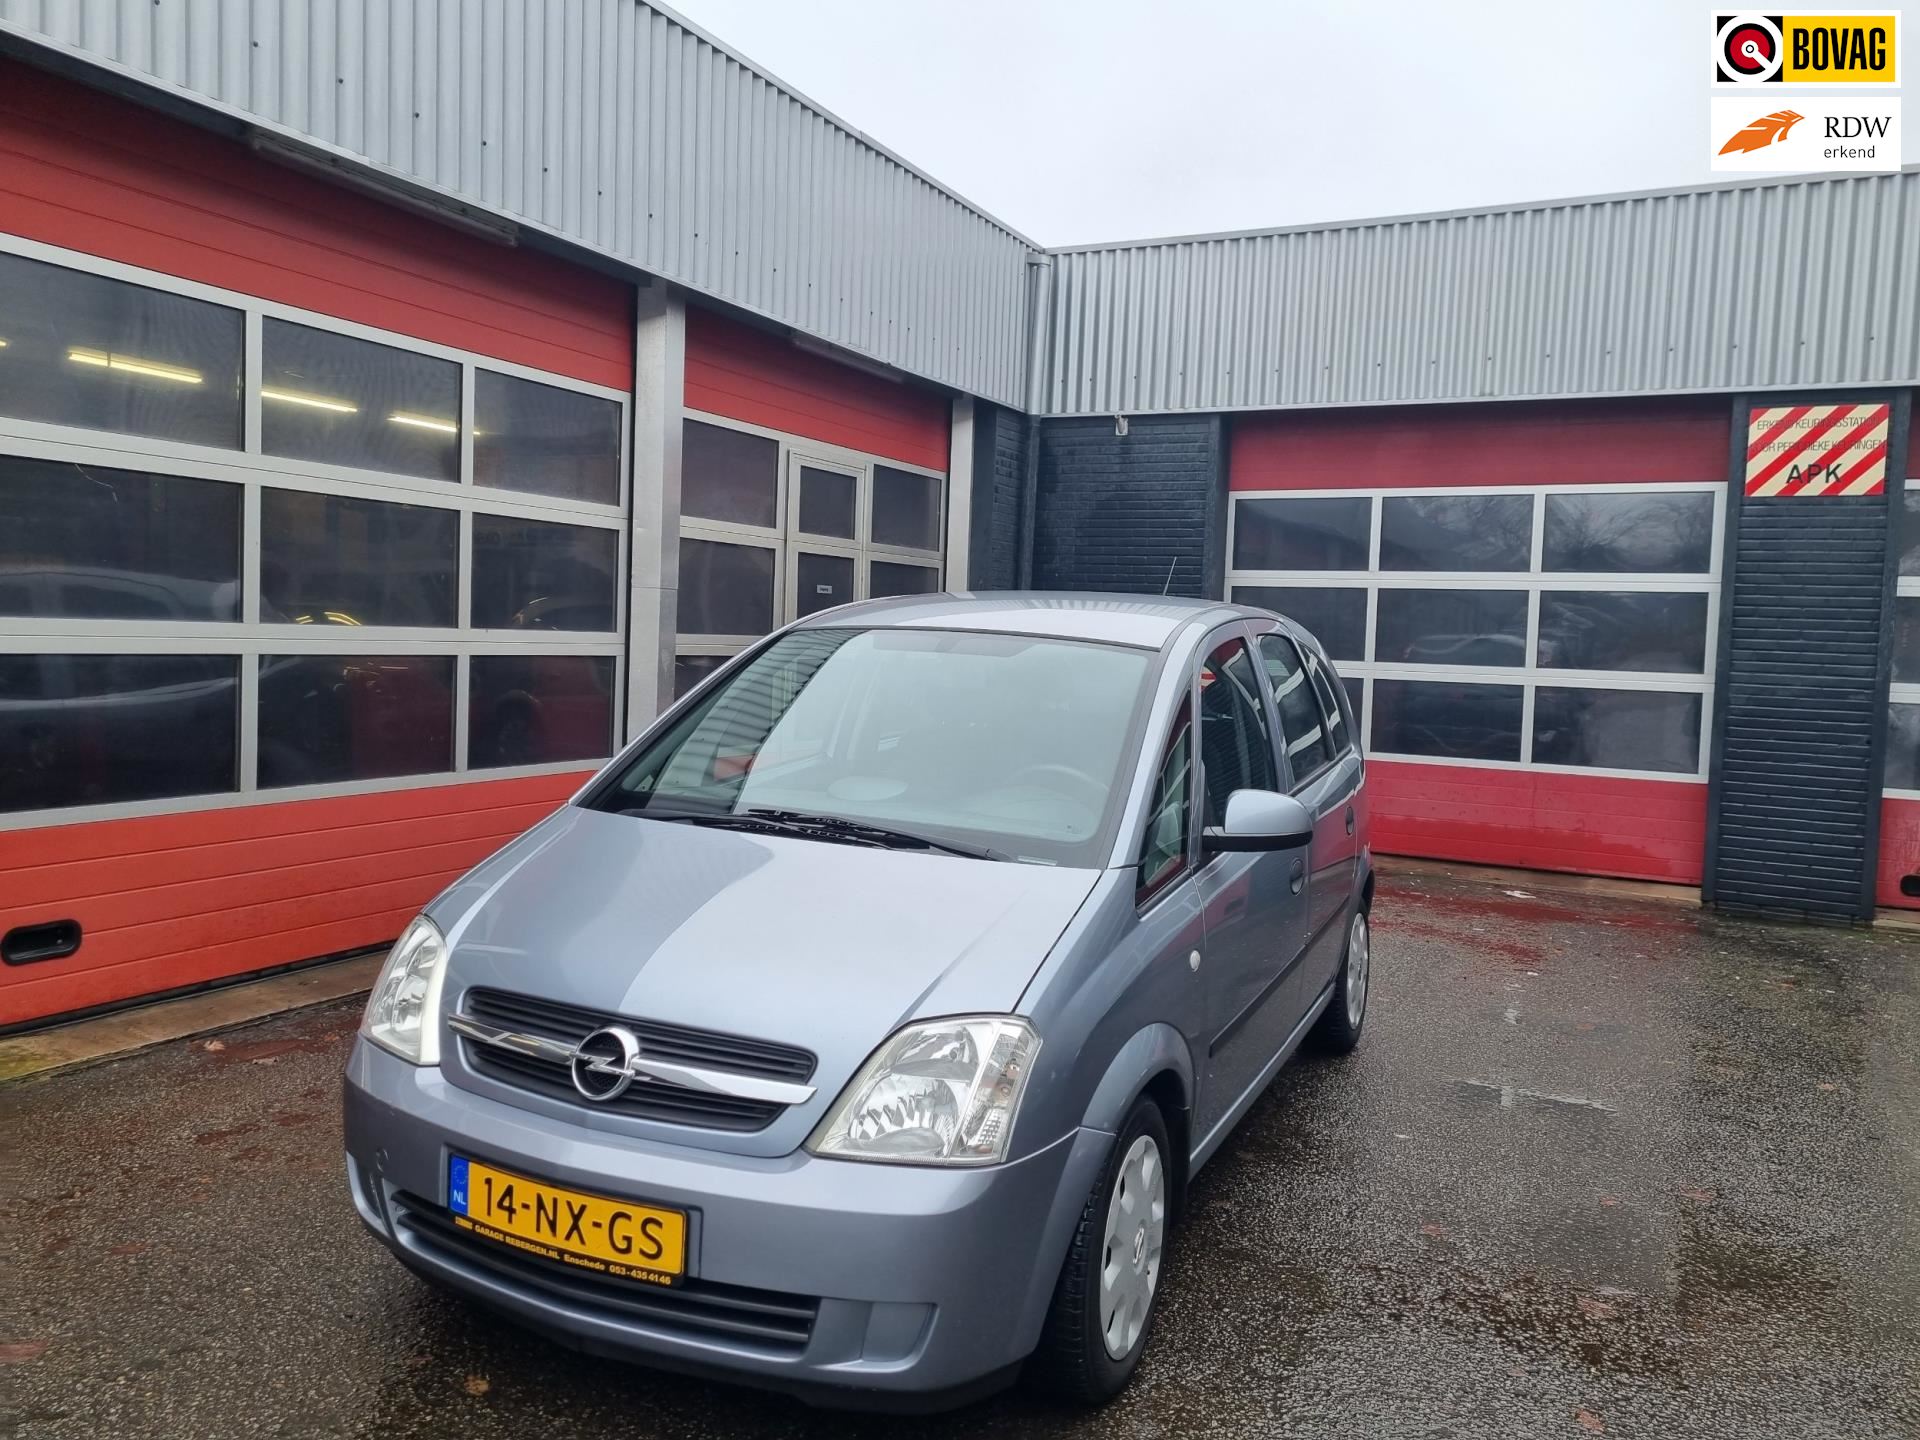 Opel Meriva occasion - Garage Rebergen